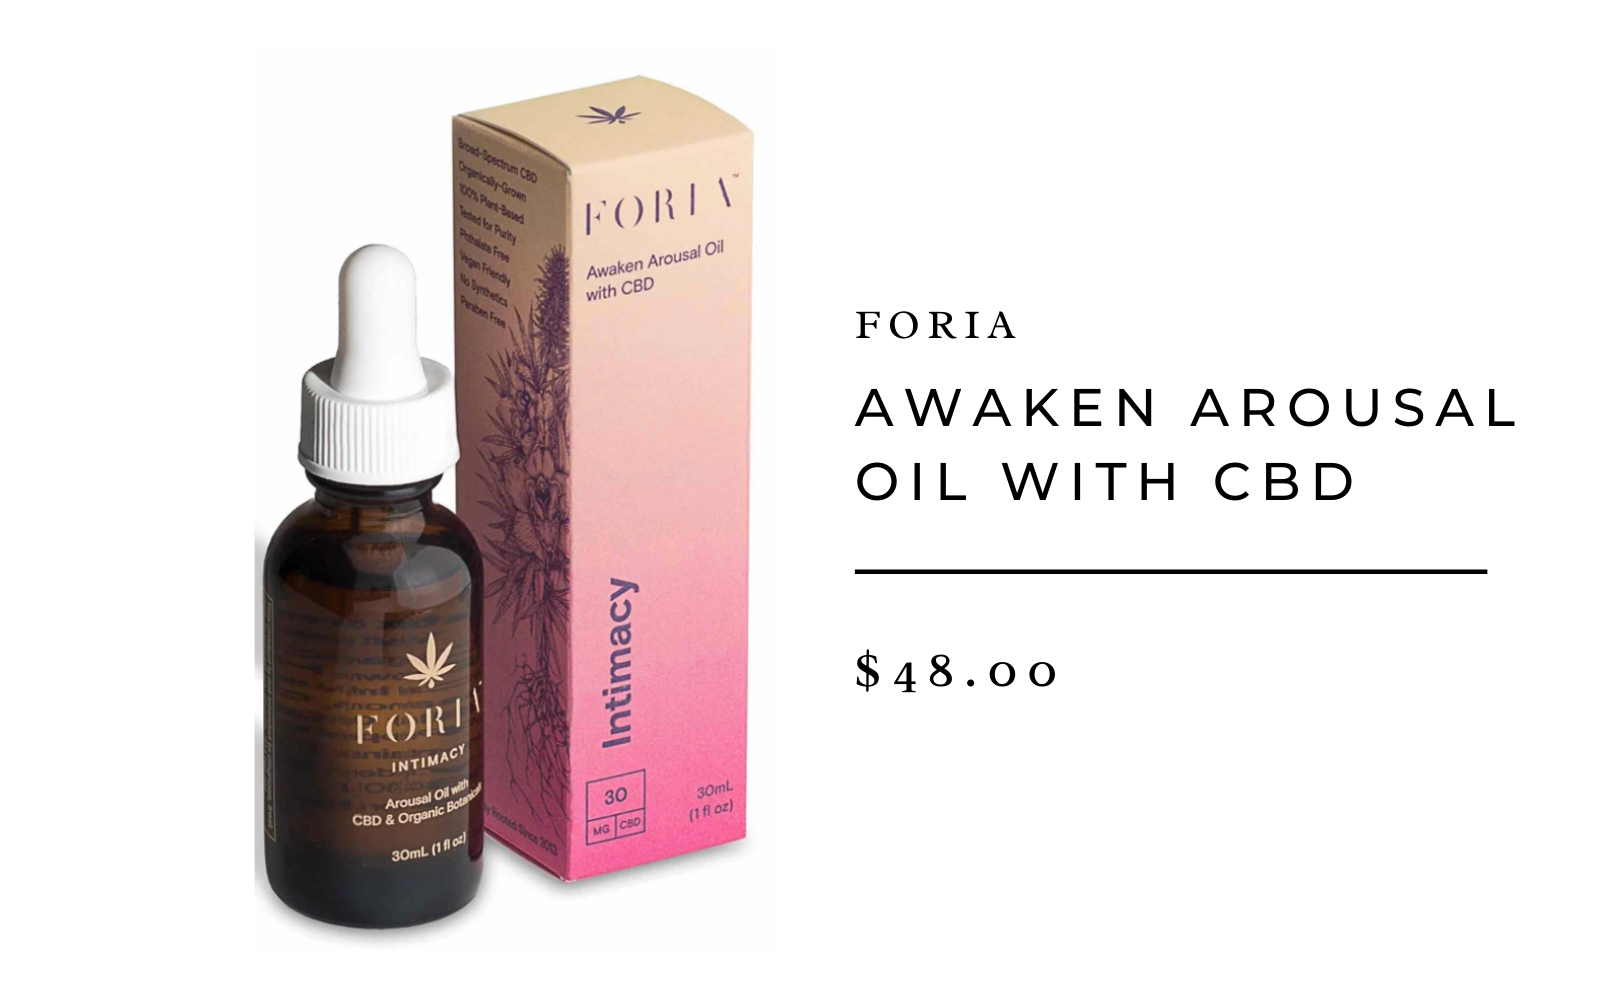 Foria Awaken Arousal Oil With CBD